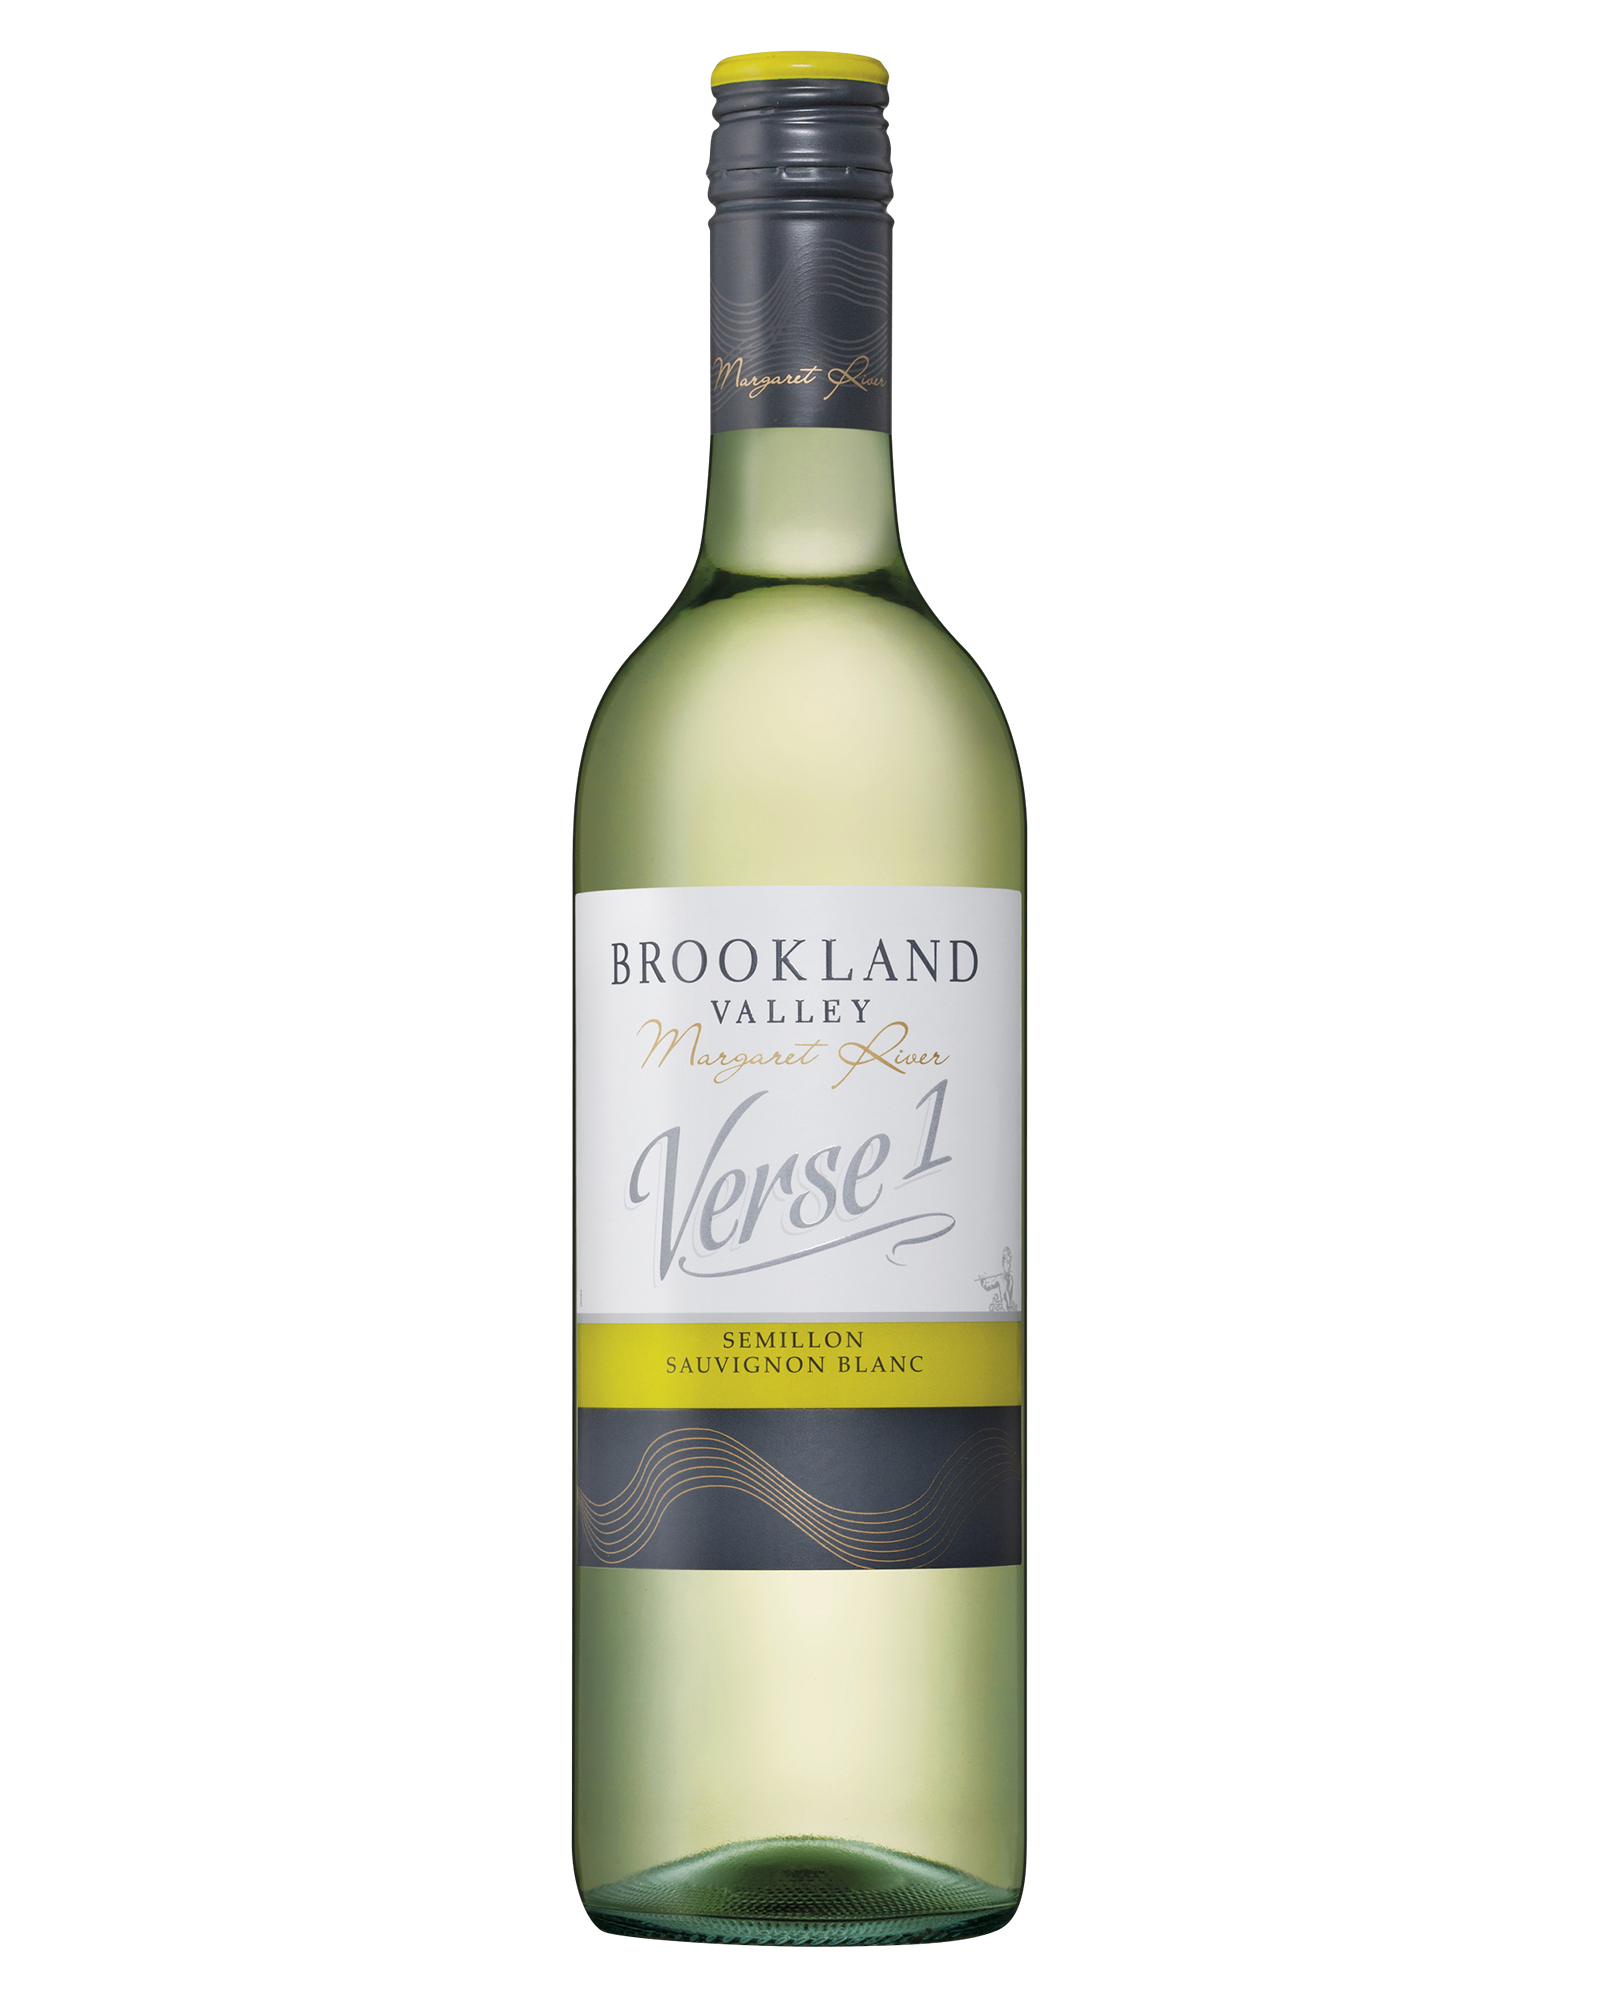 Brookland Valley Estate Verse 1 Semillon Sauvignon Blanc